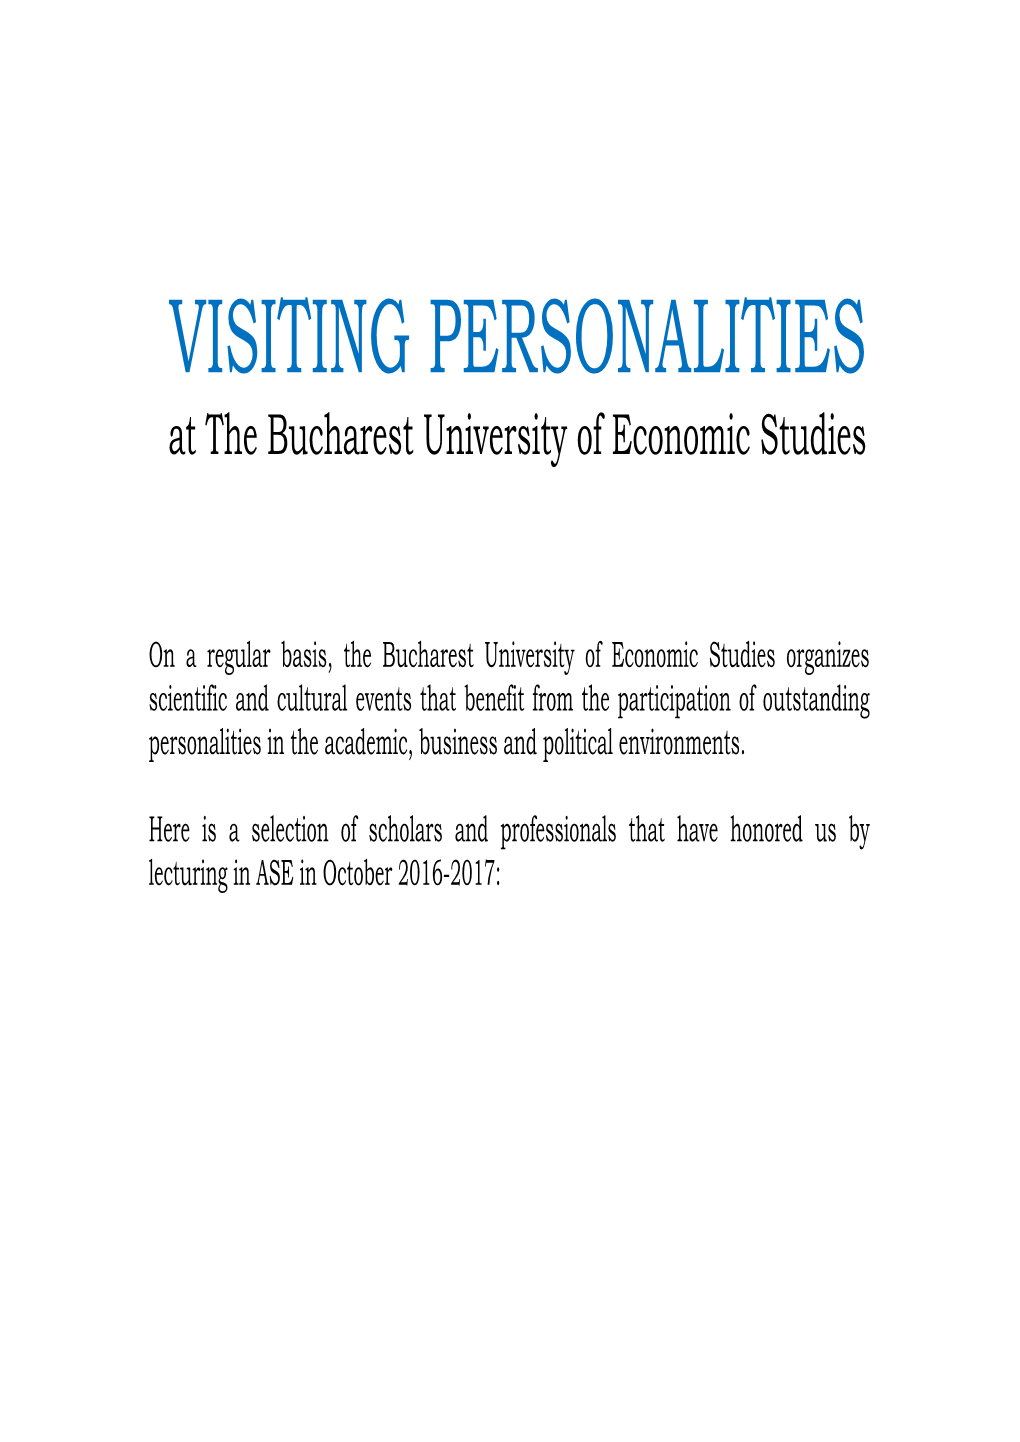 VISITING PERSONALITIES at the Bucharest University of Economic Studies